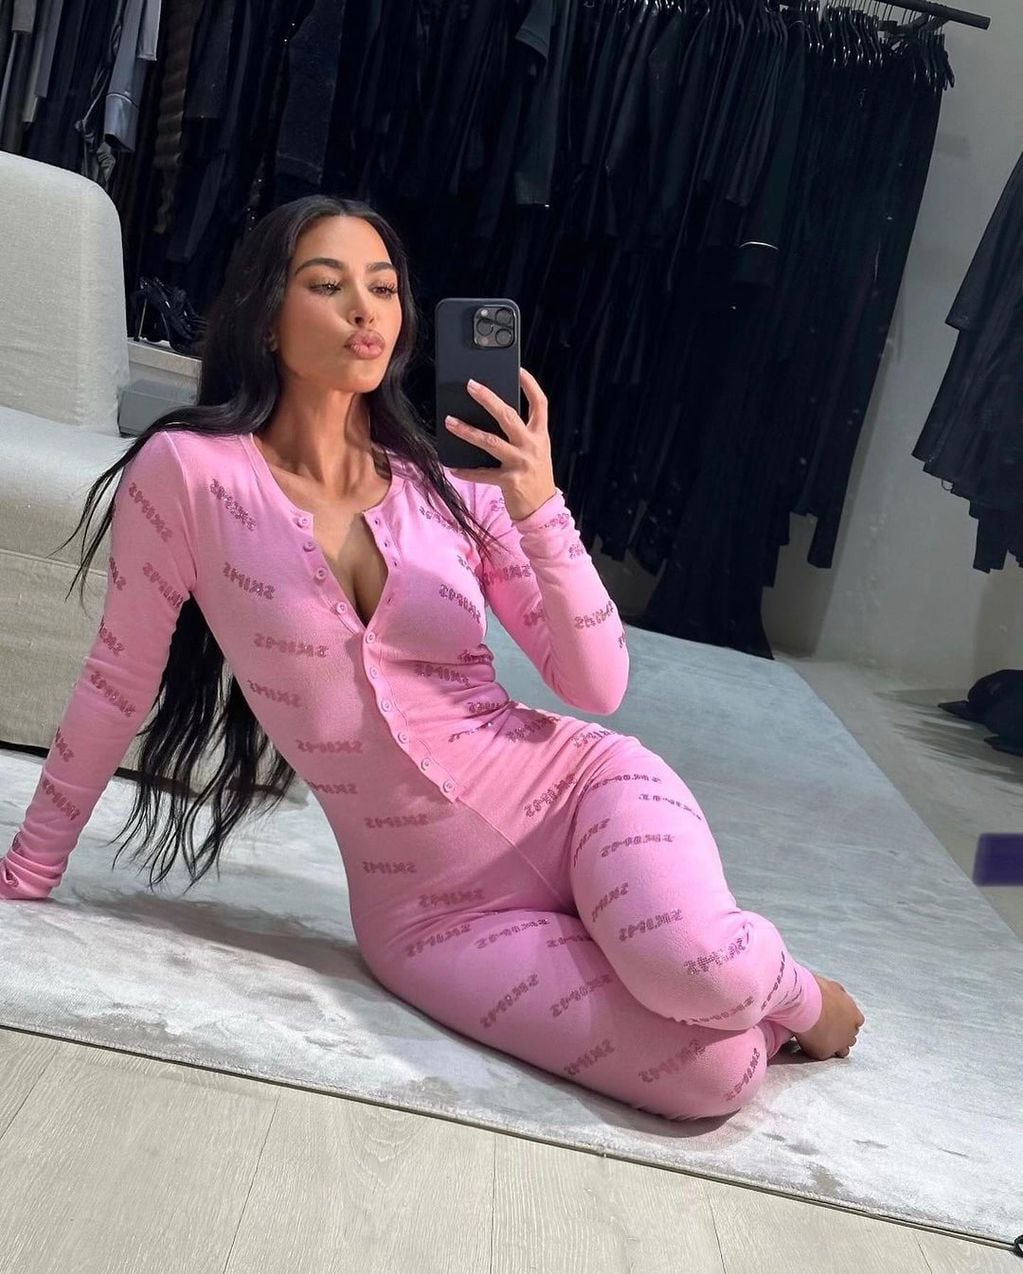 Kim Kardashian se preparó para ir a dormir, pero antes, cautivó con un ajustado pijama.